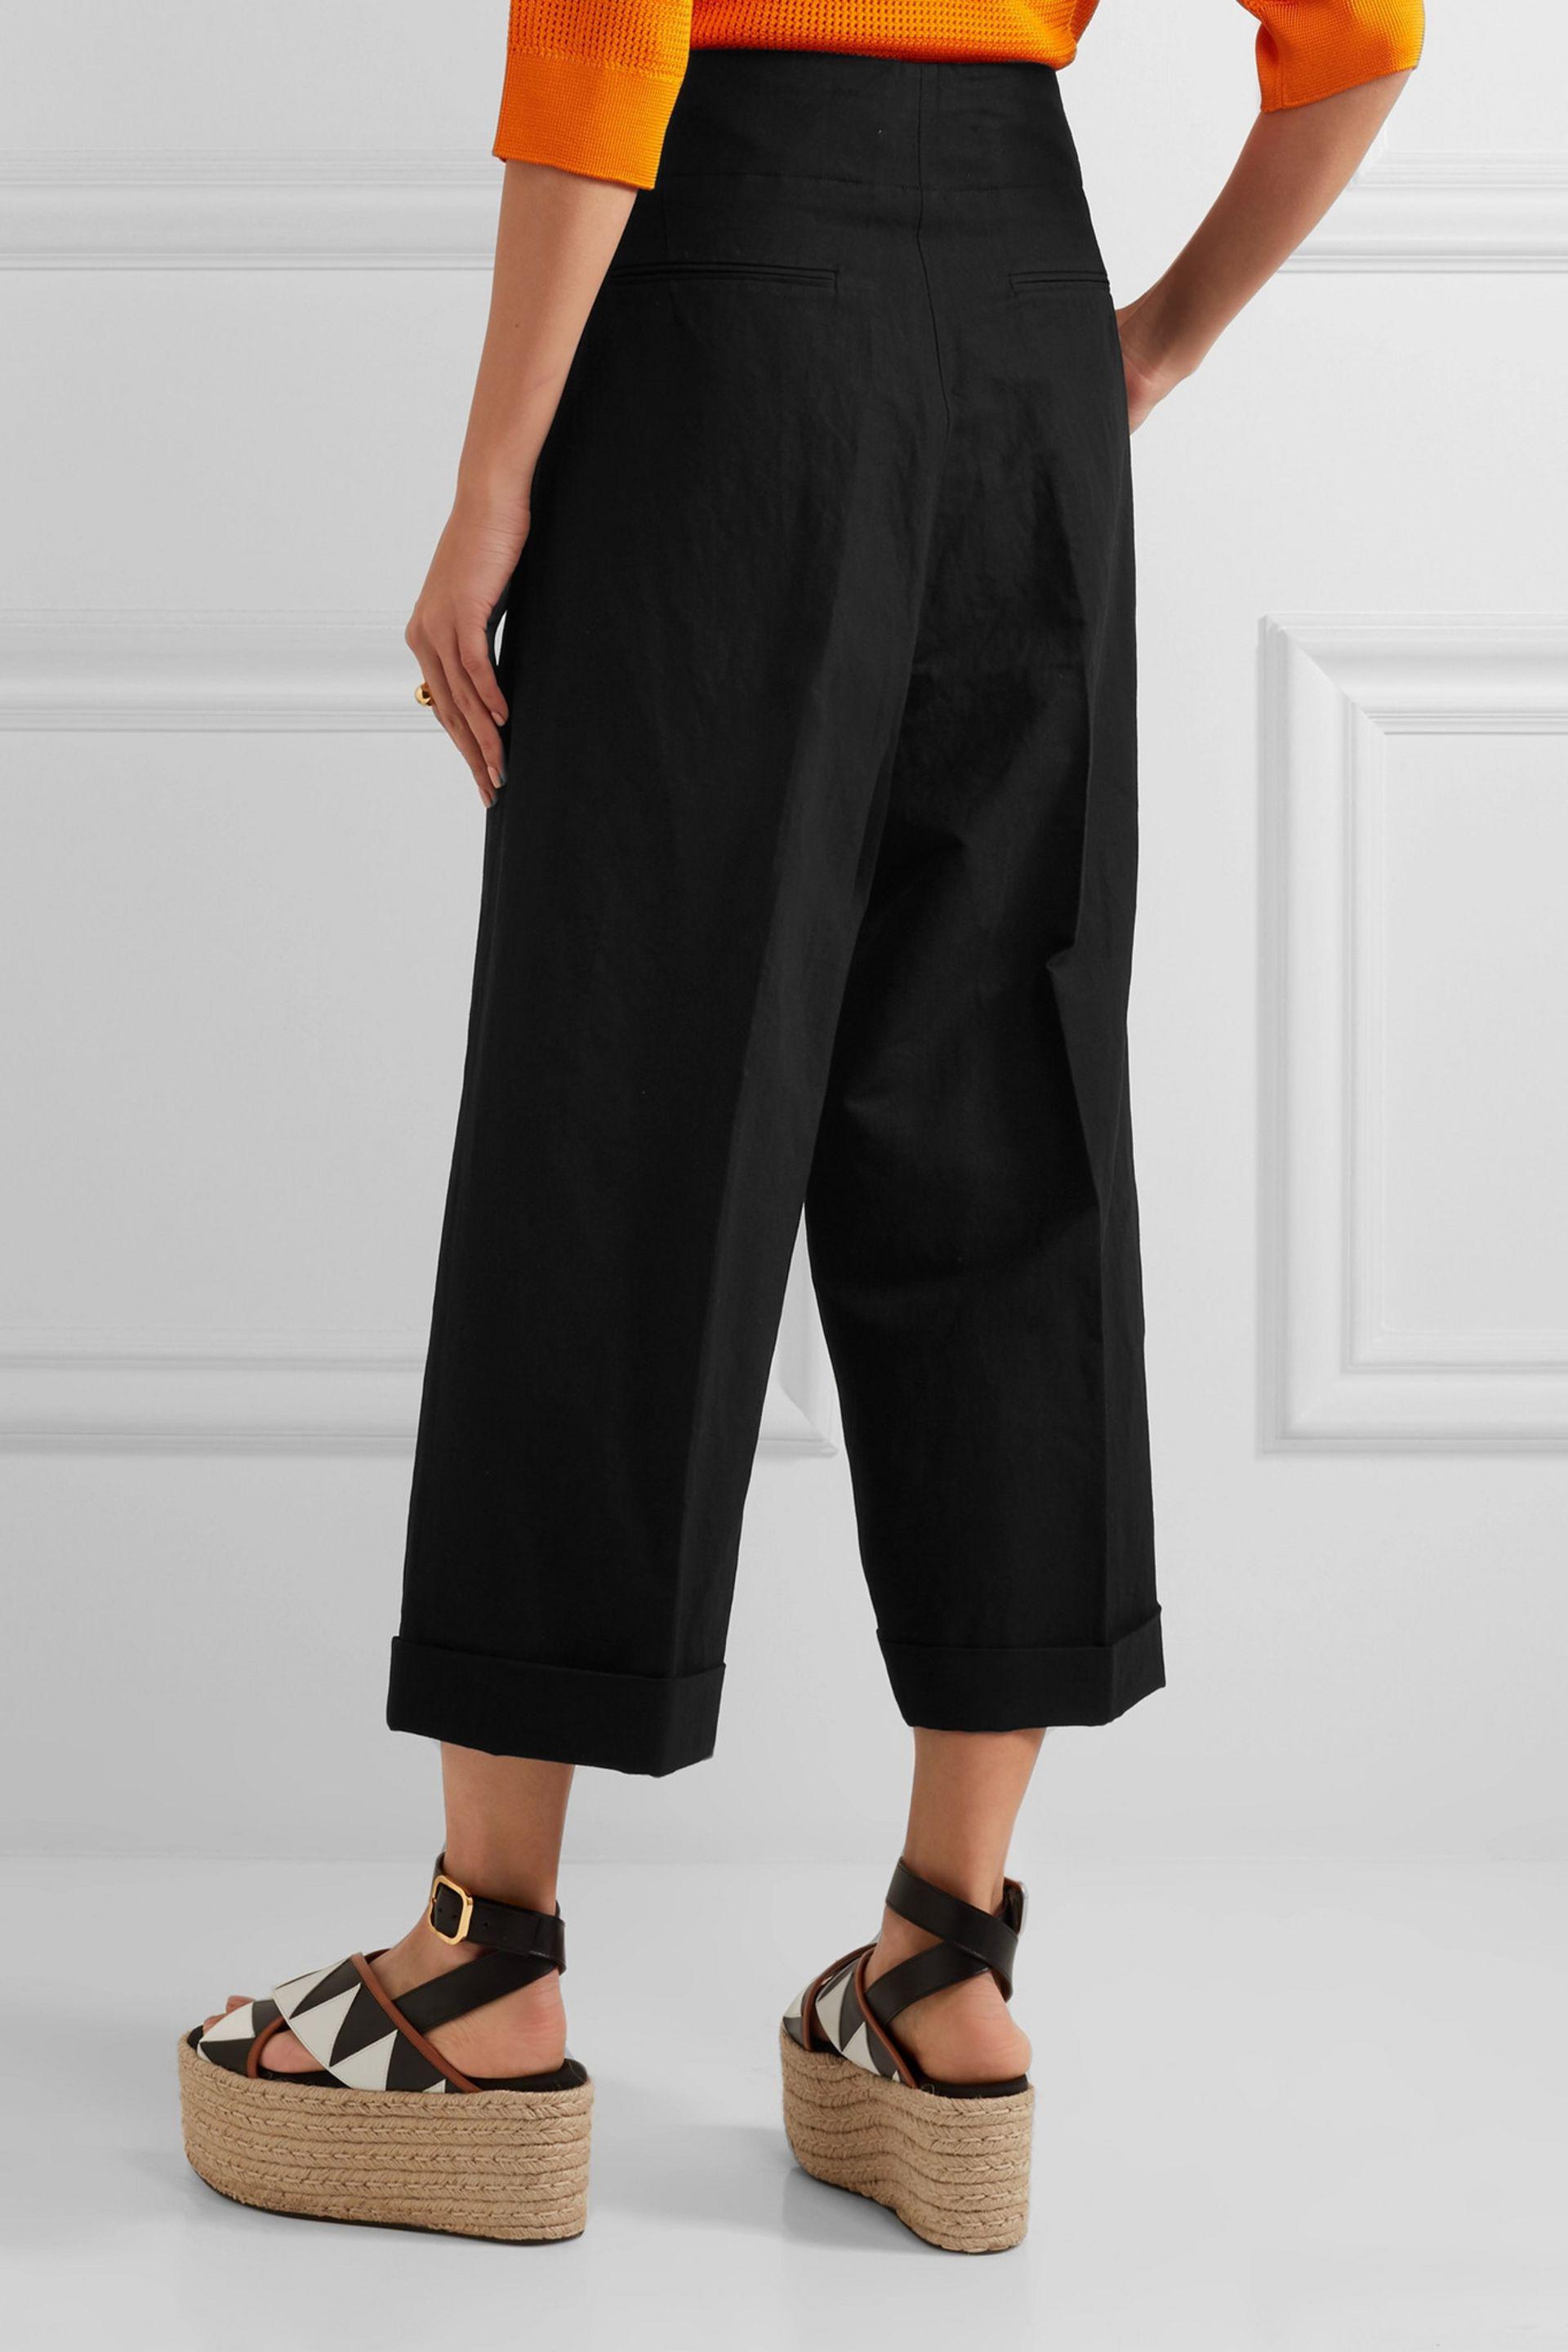 Lyst - Marni Pleated Linen-blend Wide-leg Pants in Black